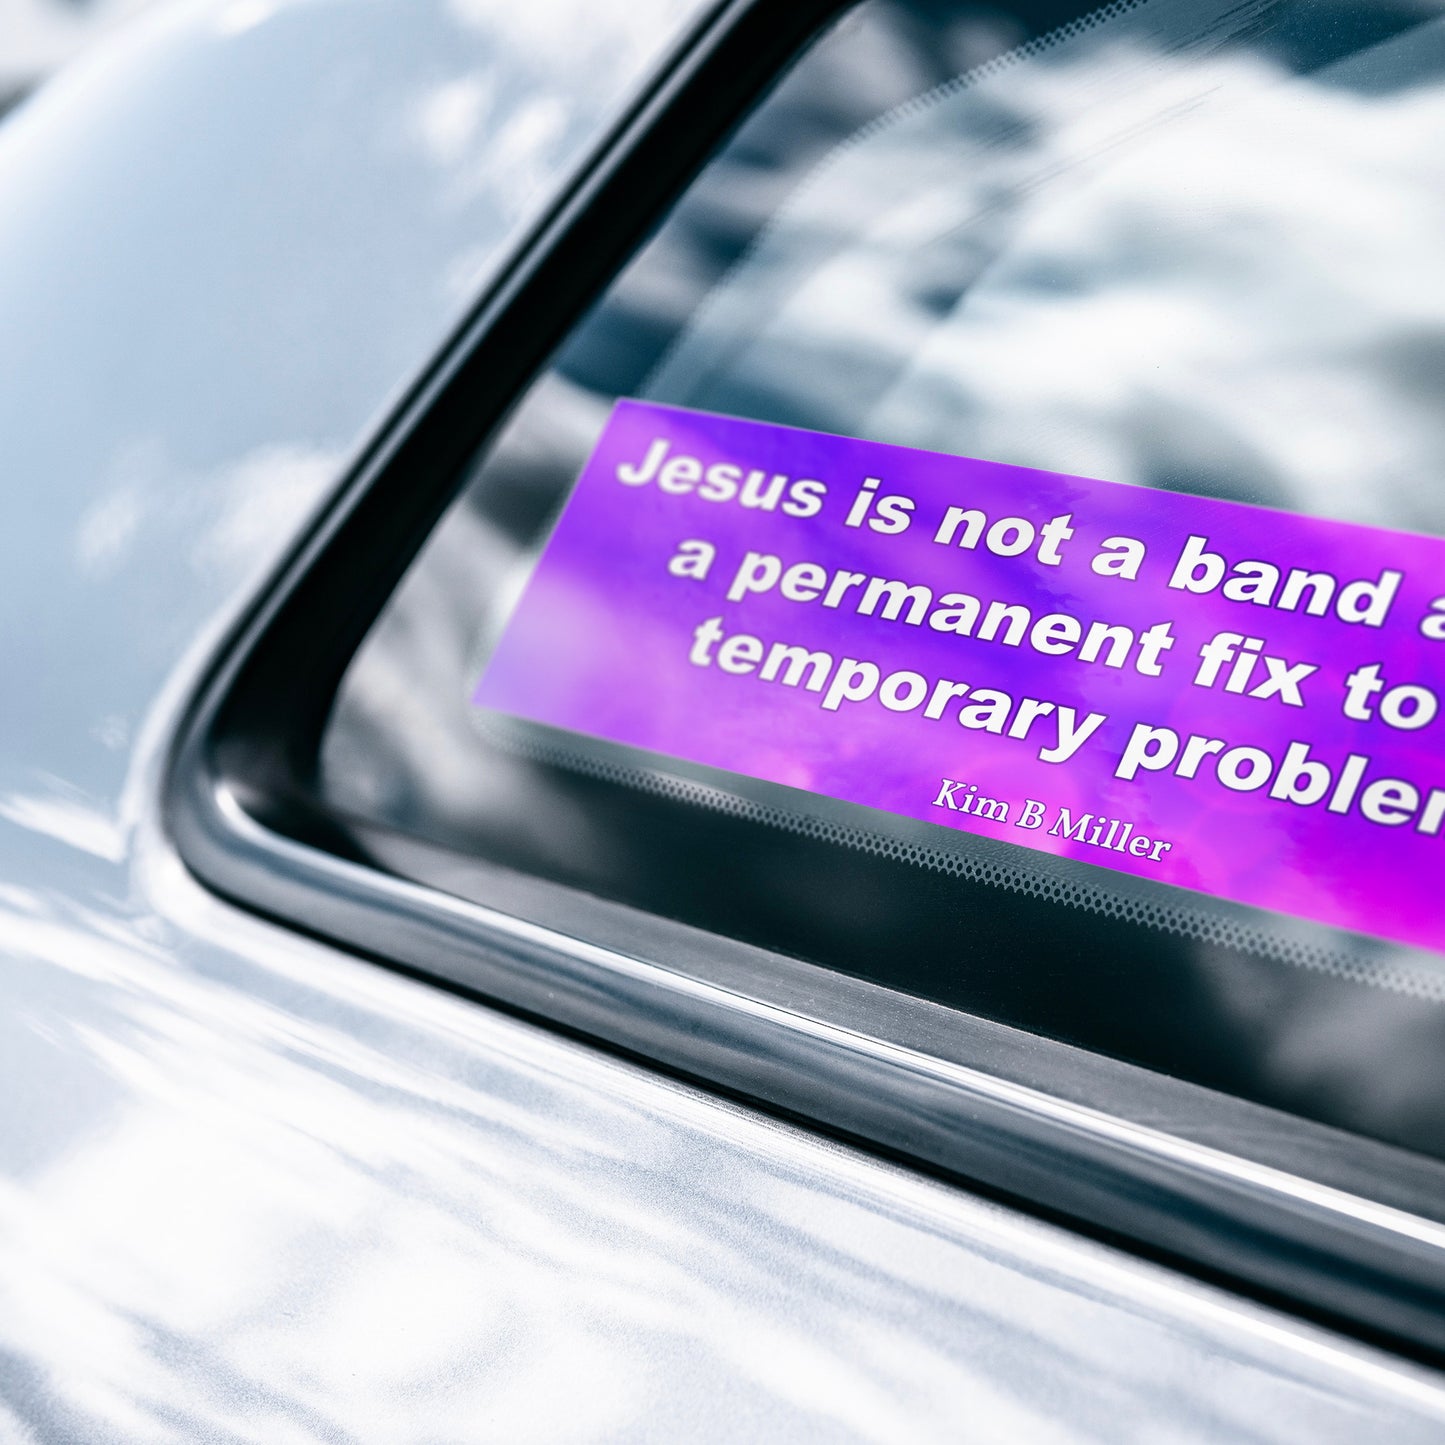 Jesus Band Aid Bumper/Laptop Sticker Purple